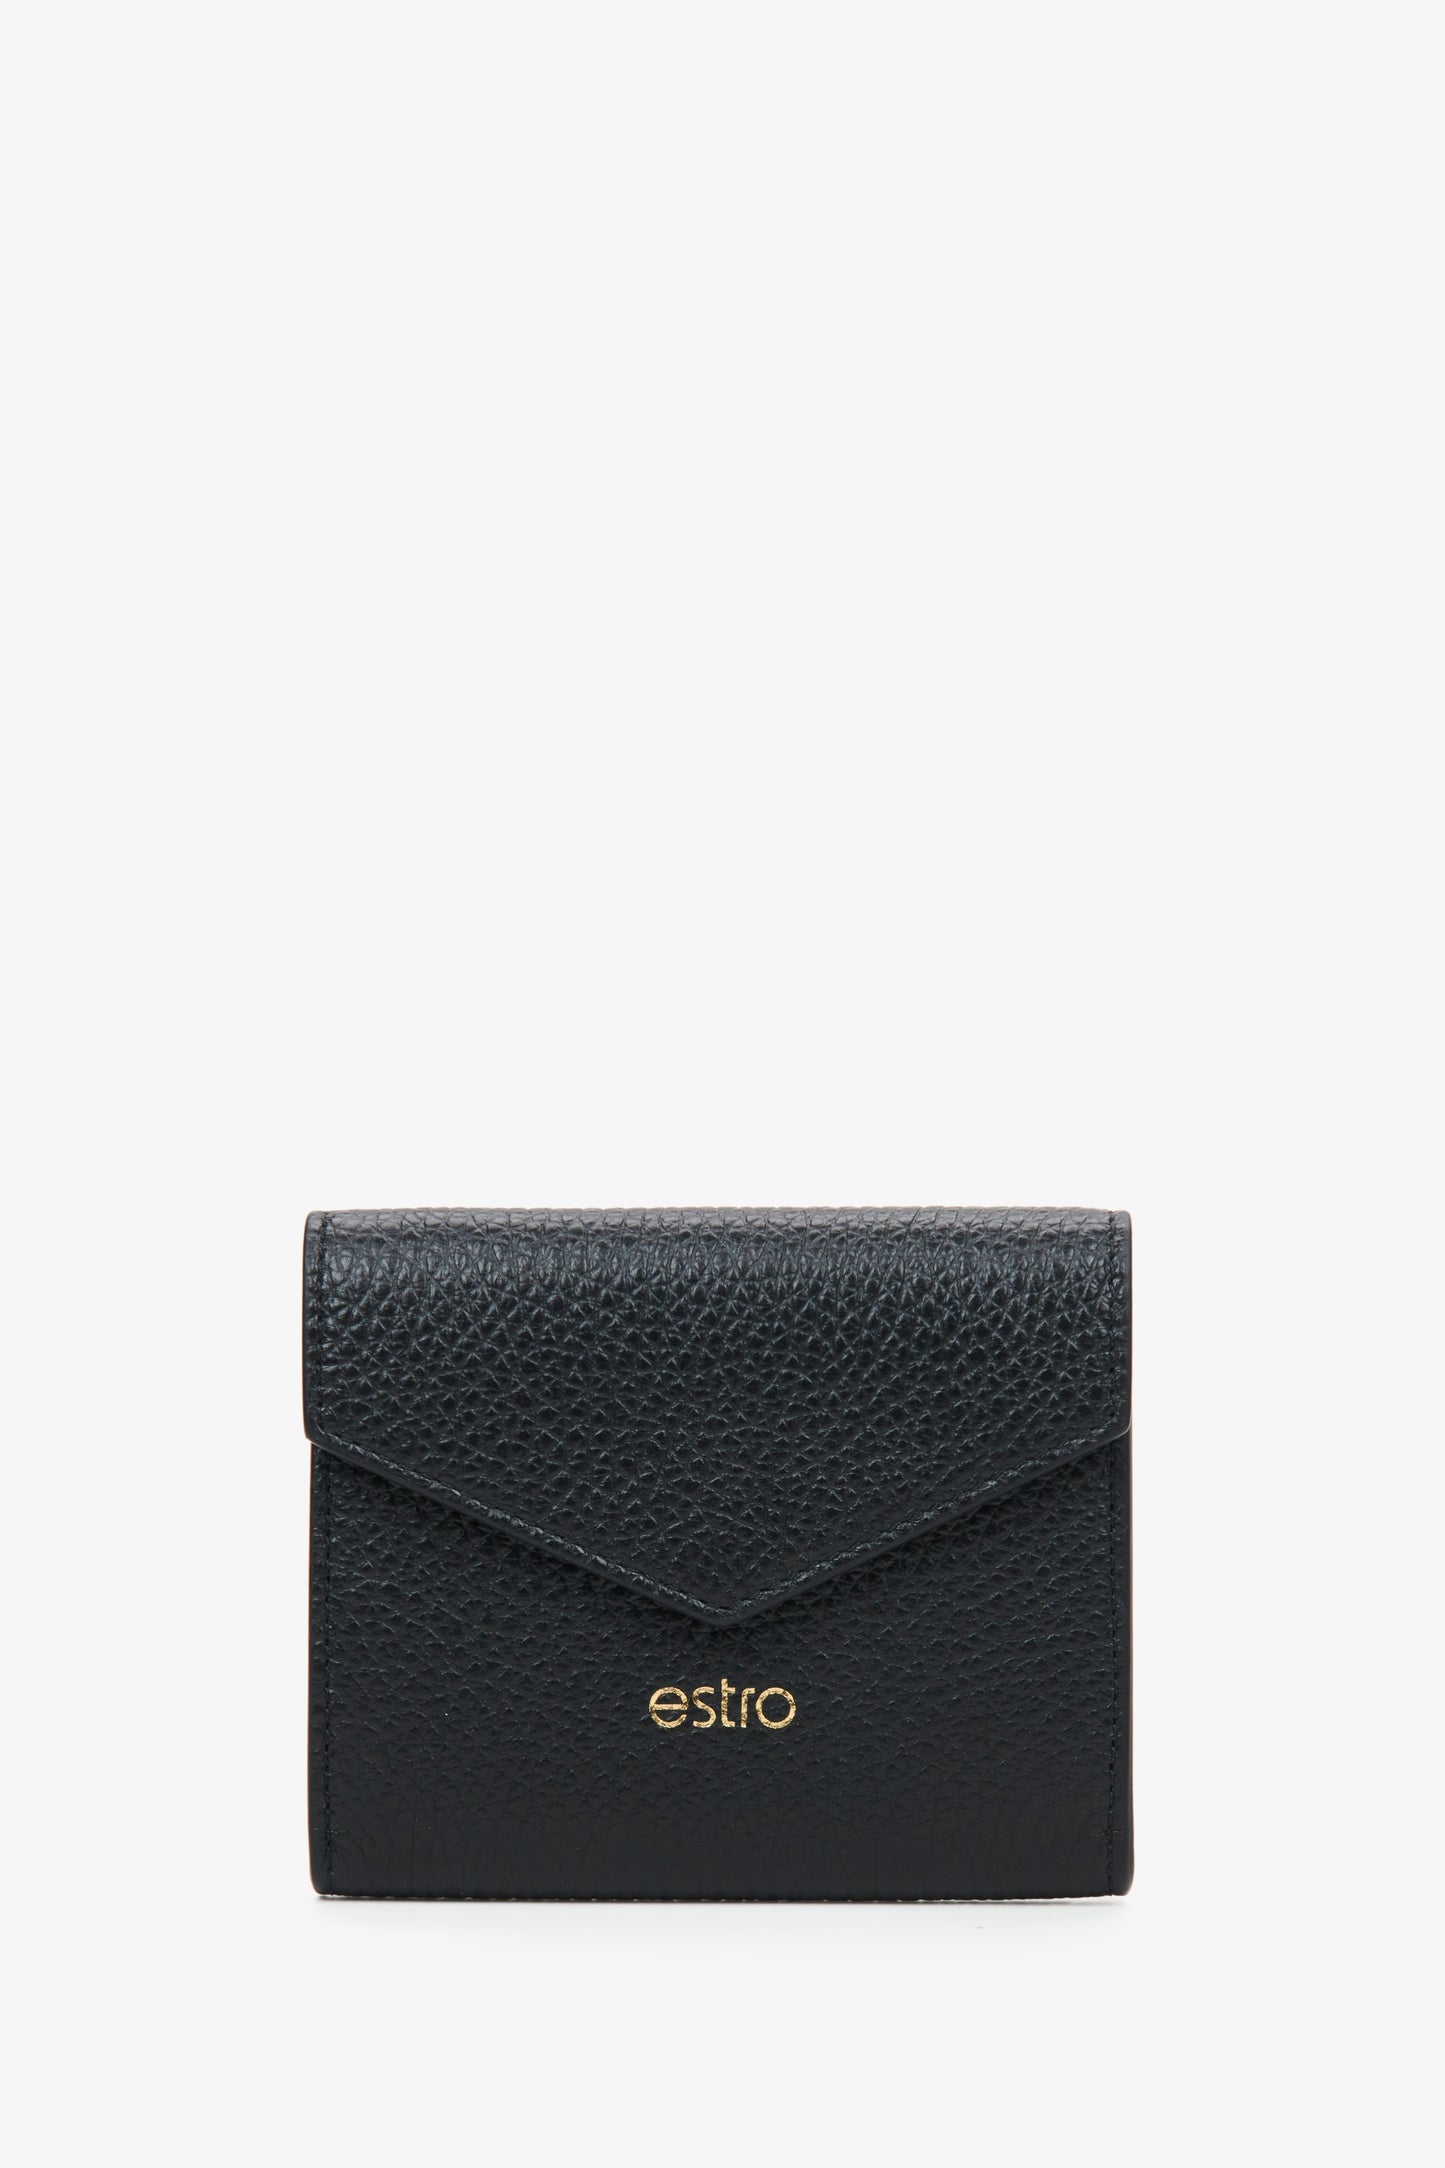 Mały czarny portfel damski z włoskiej skóry naturalnej Estro ER00115022